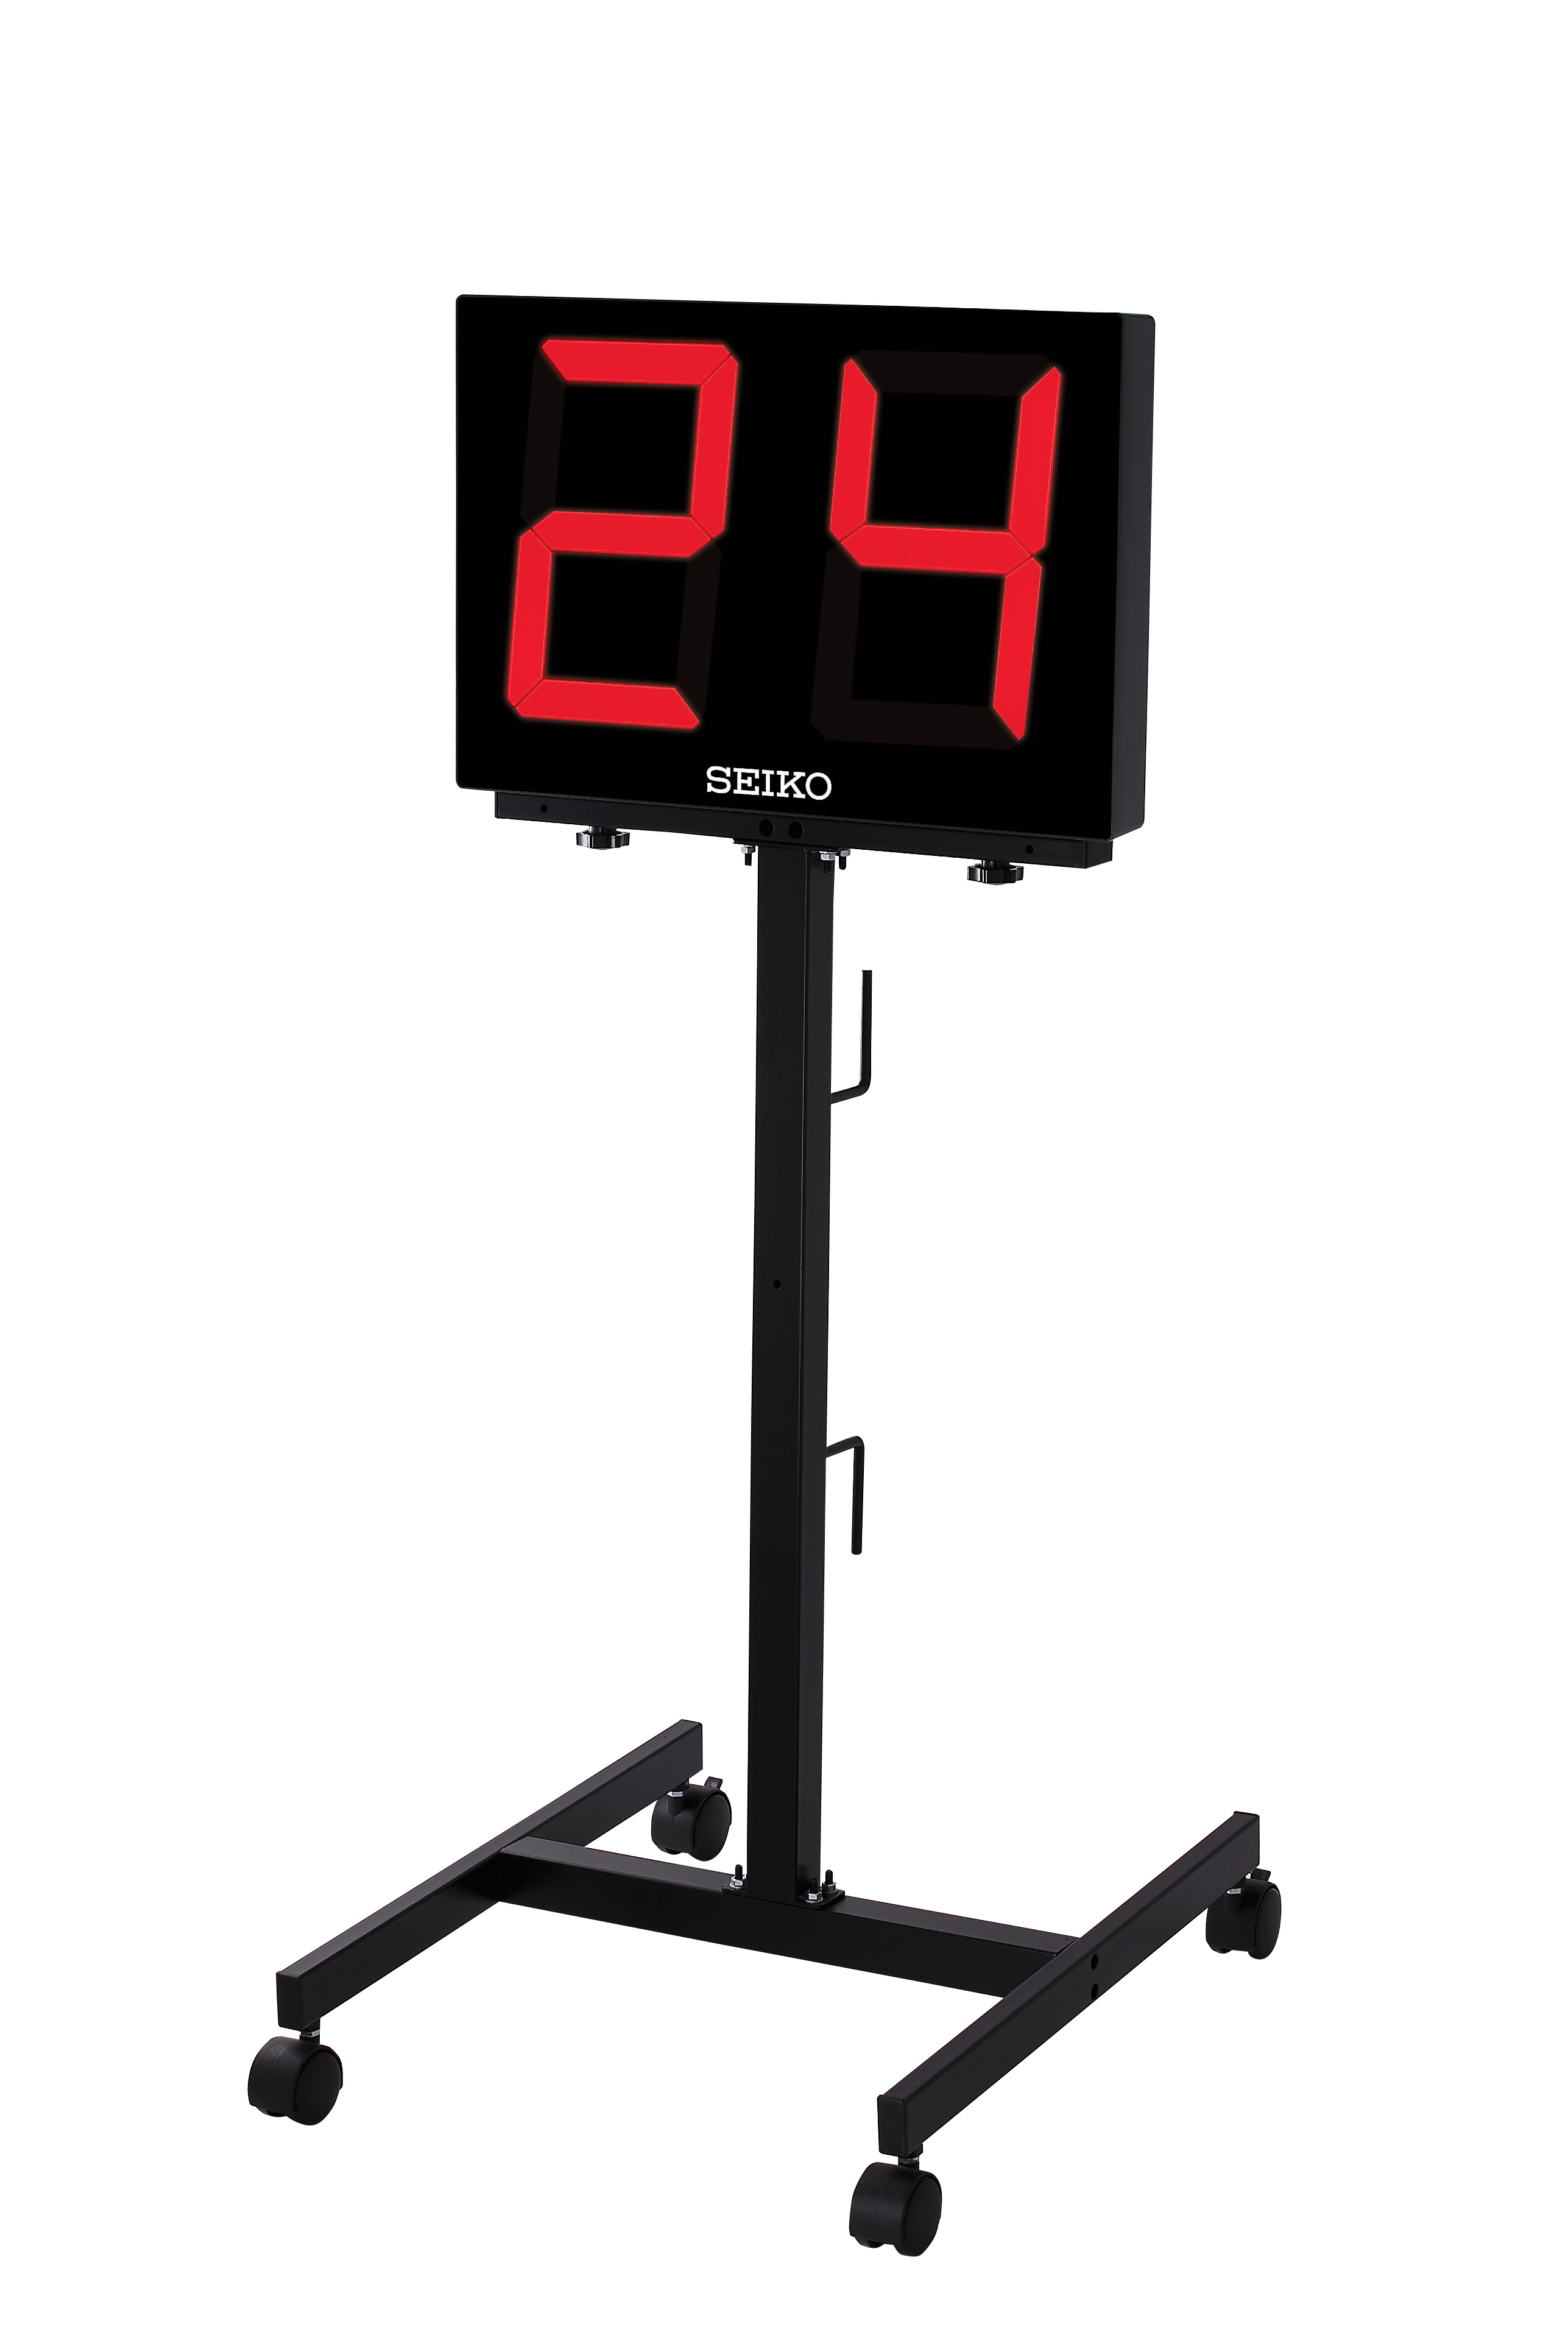 Caster Stand For Seiko Shot Clock or Scoreboard